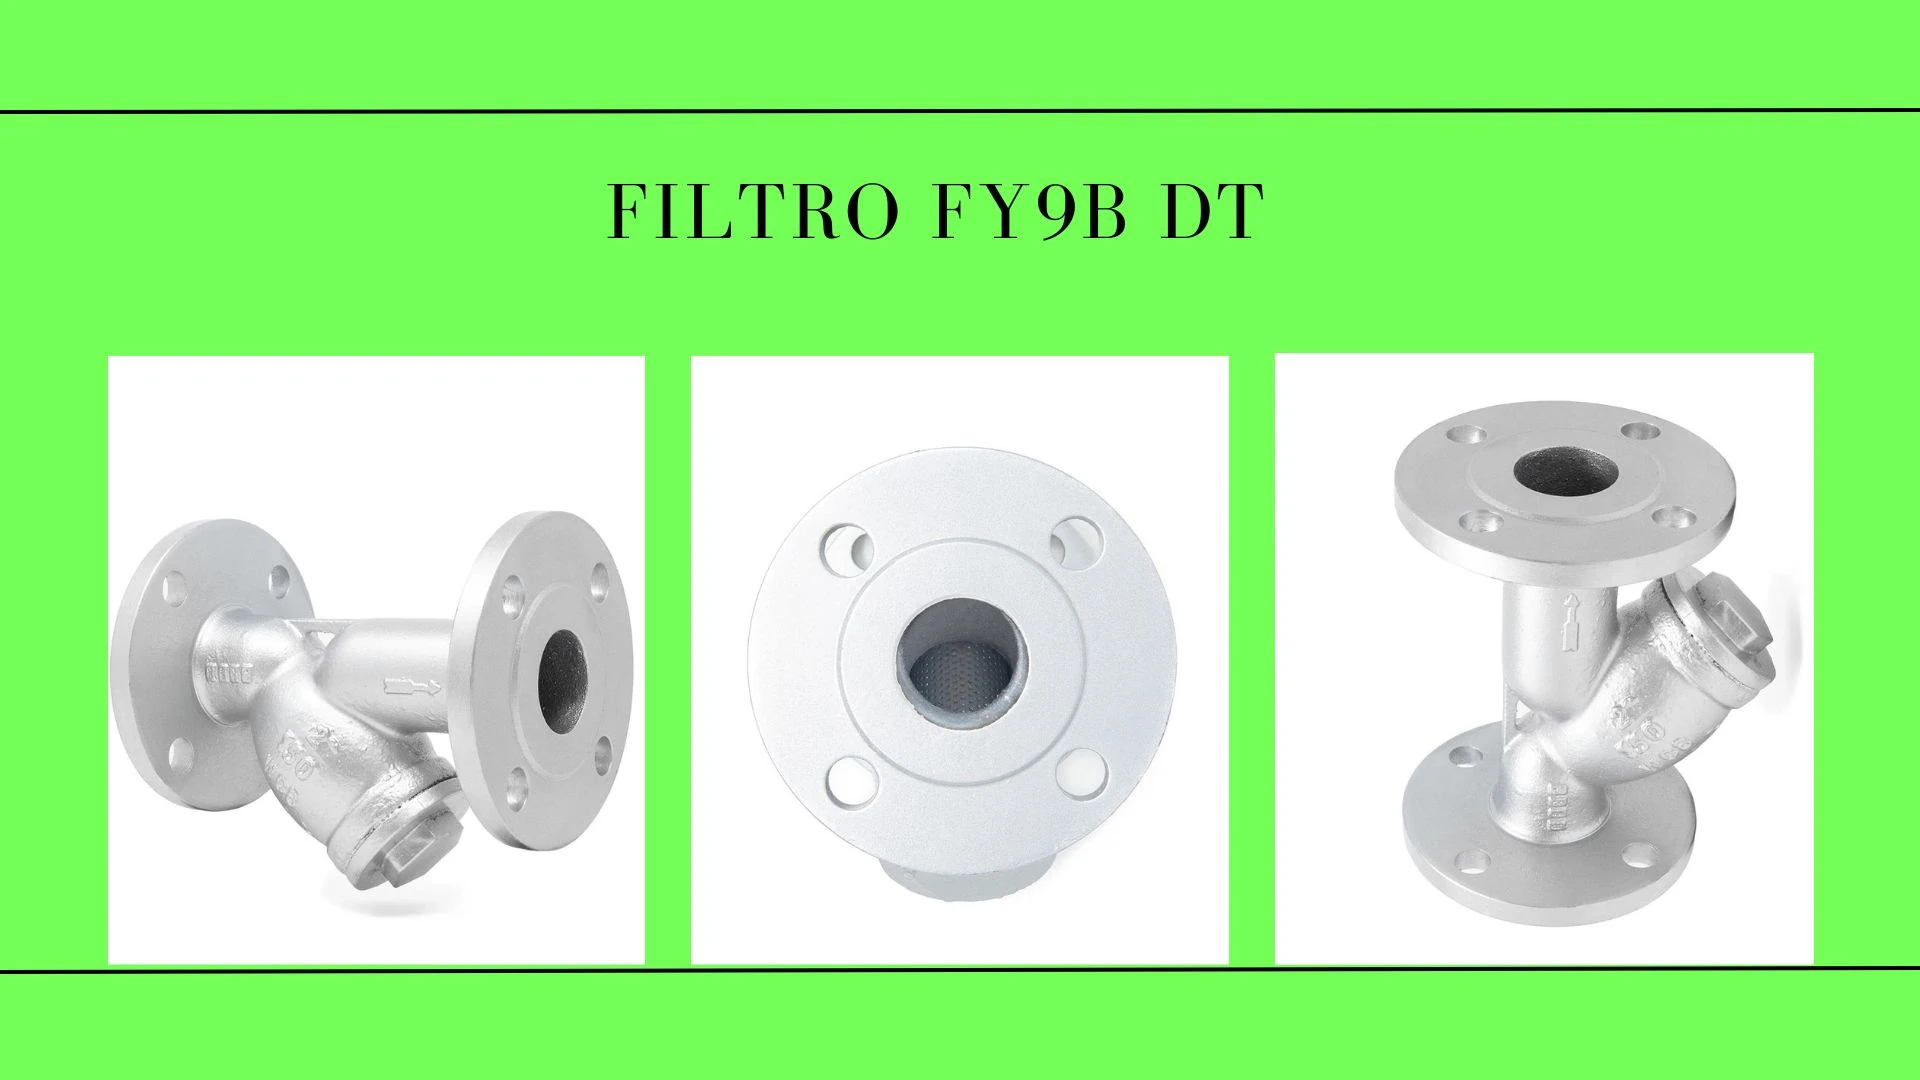 Filtro FY9B DT